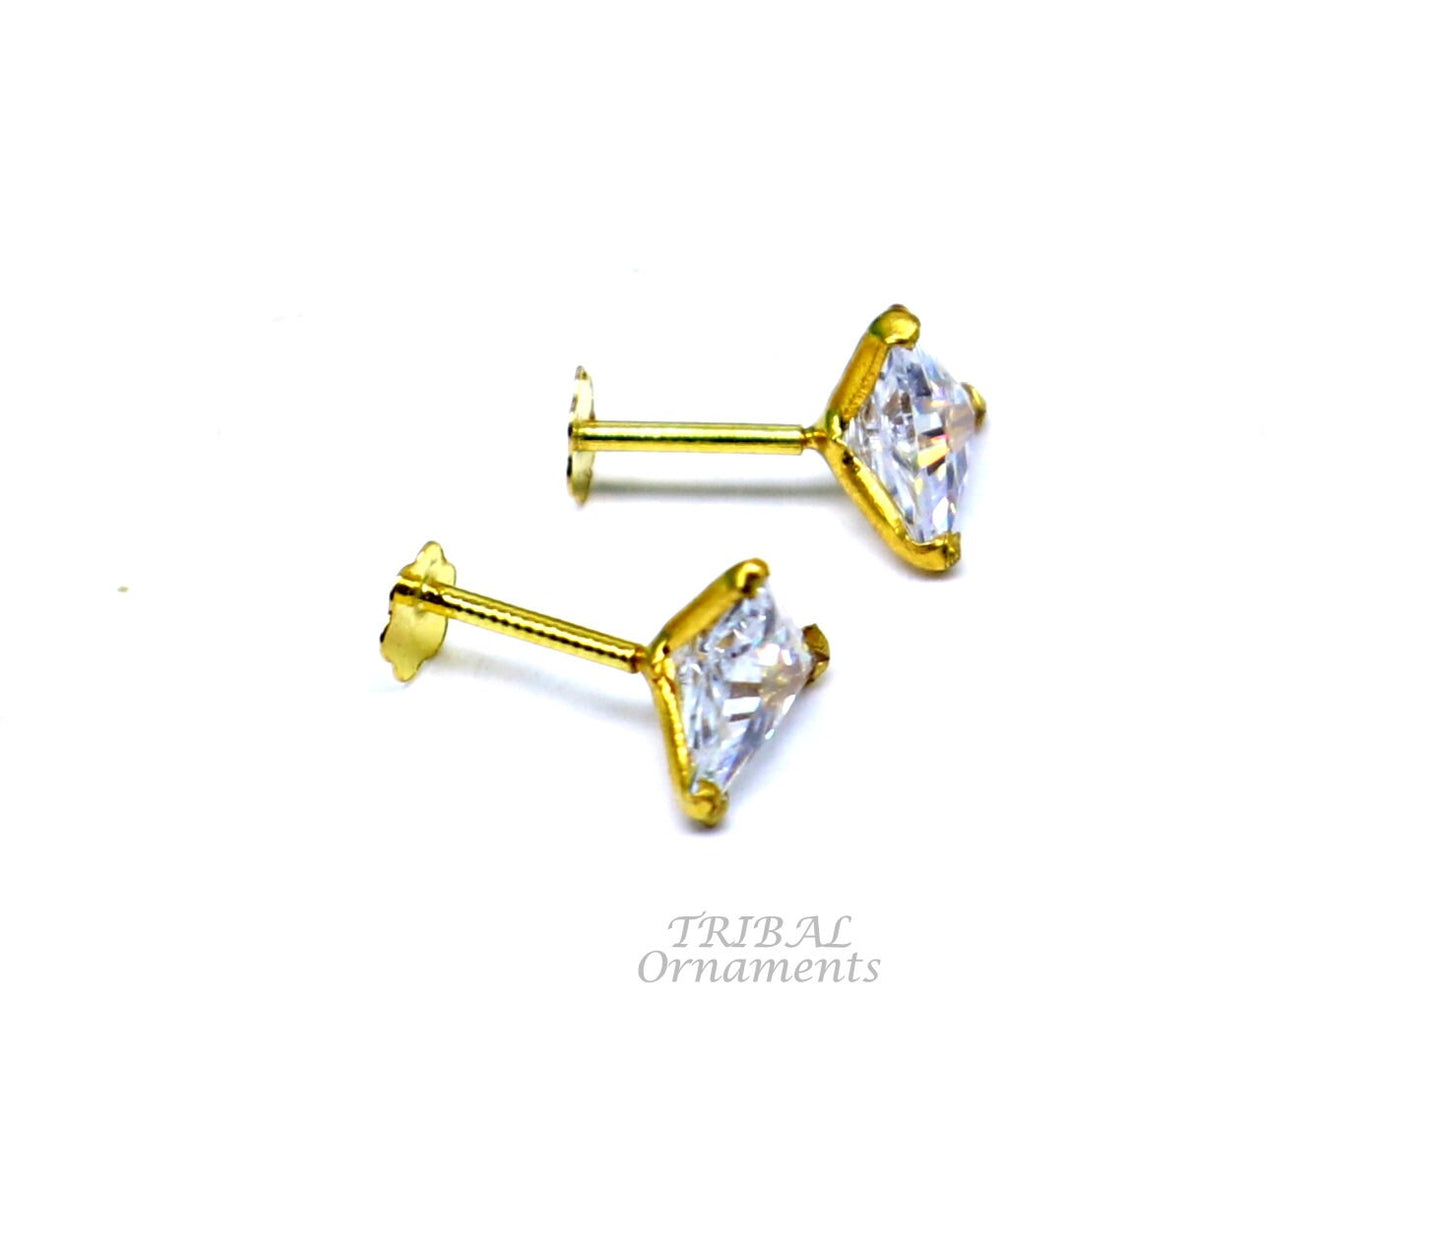 5mm 18kt yellow gold handmade single stone Triangle shape stud earring cartilage earring customized unisex screw back stud jewelry er148 - TRIBAL ORNAMENTS